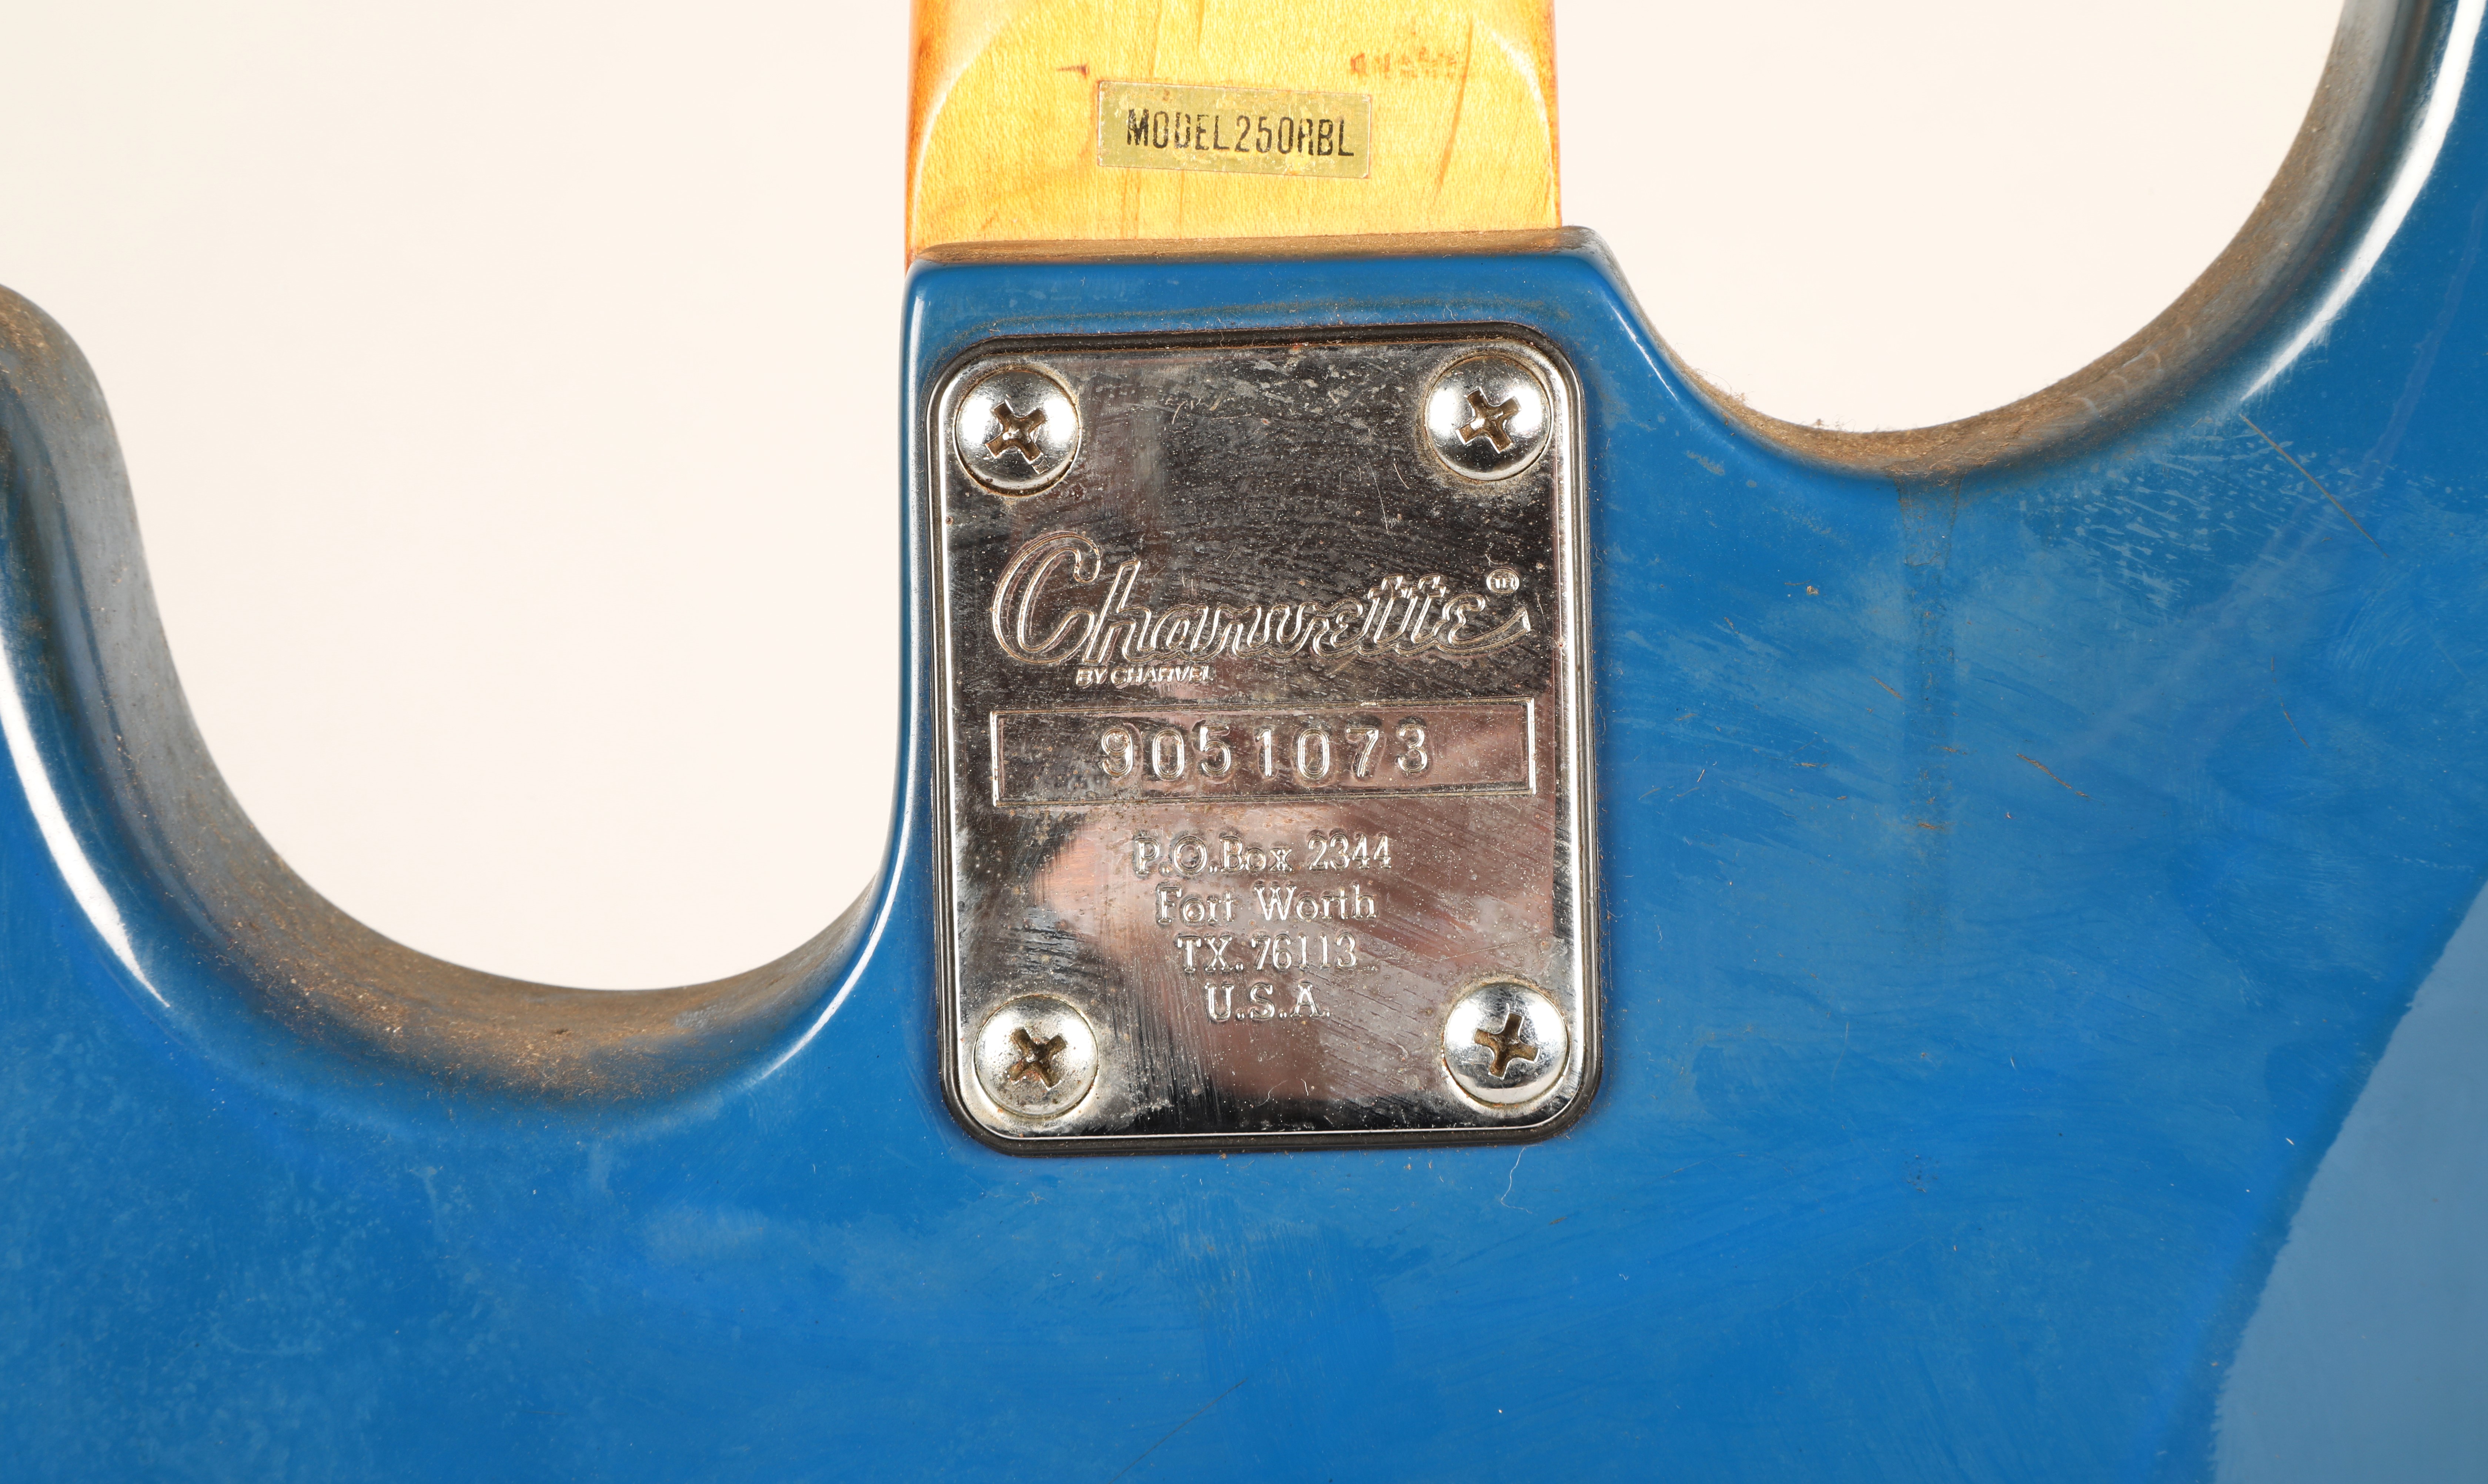 Charvette Charvel blue electric guitar, - Image 5 of 5